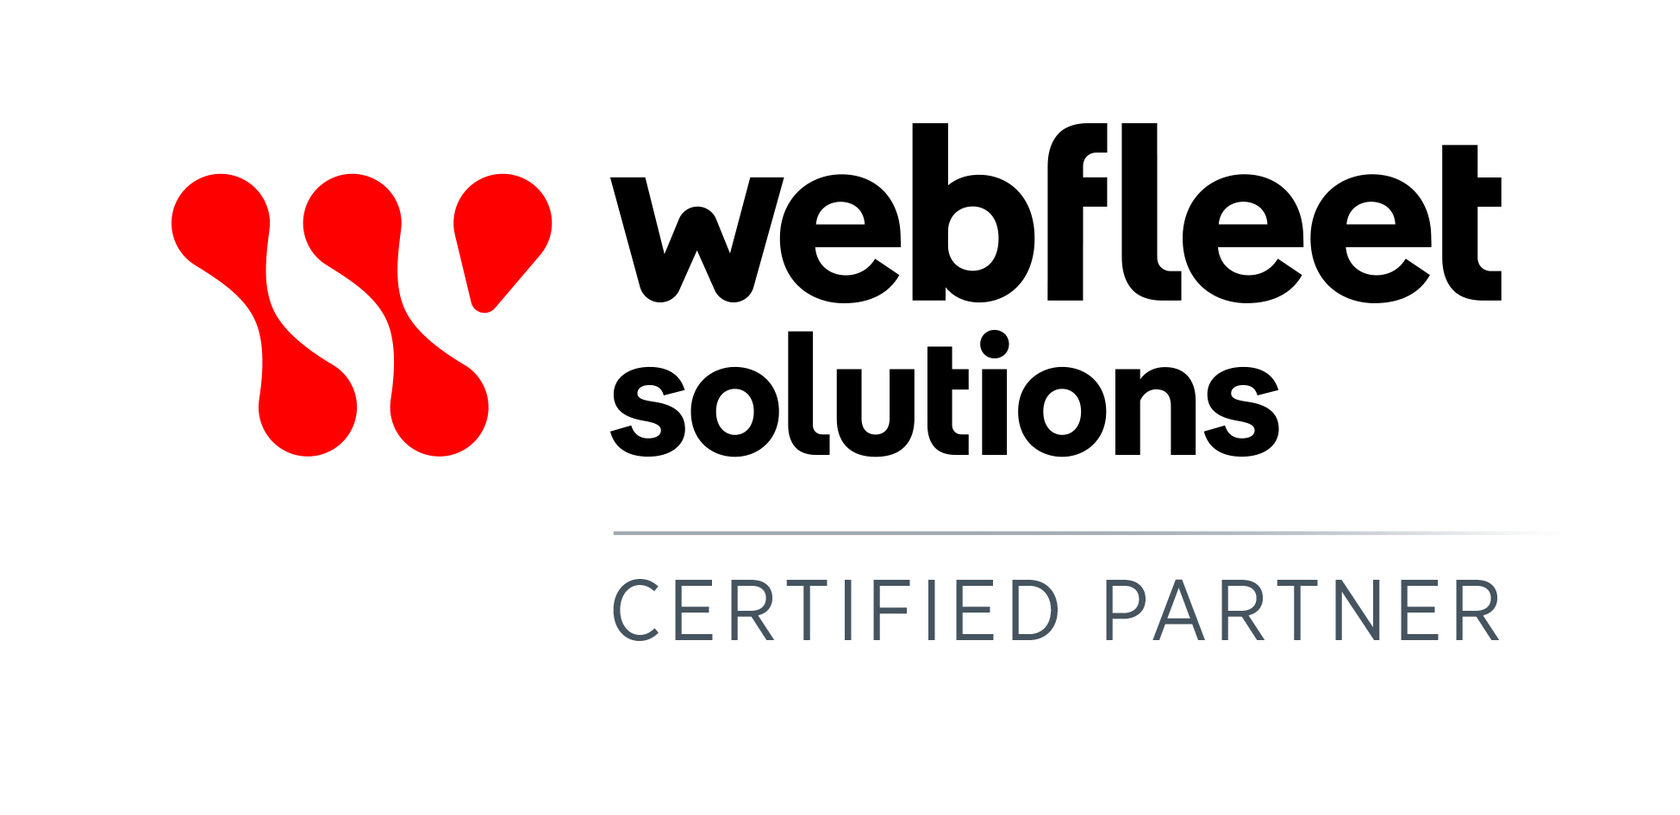 Webfleet solutions certified partner logo